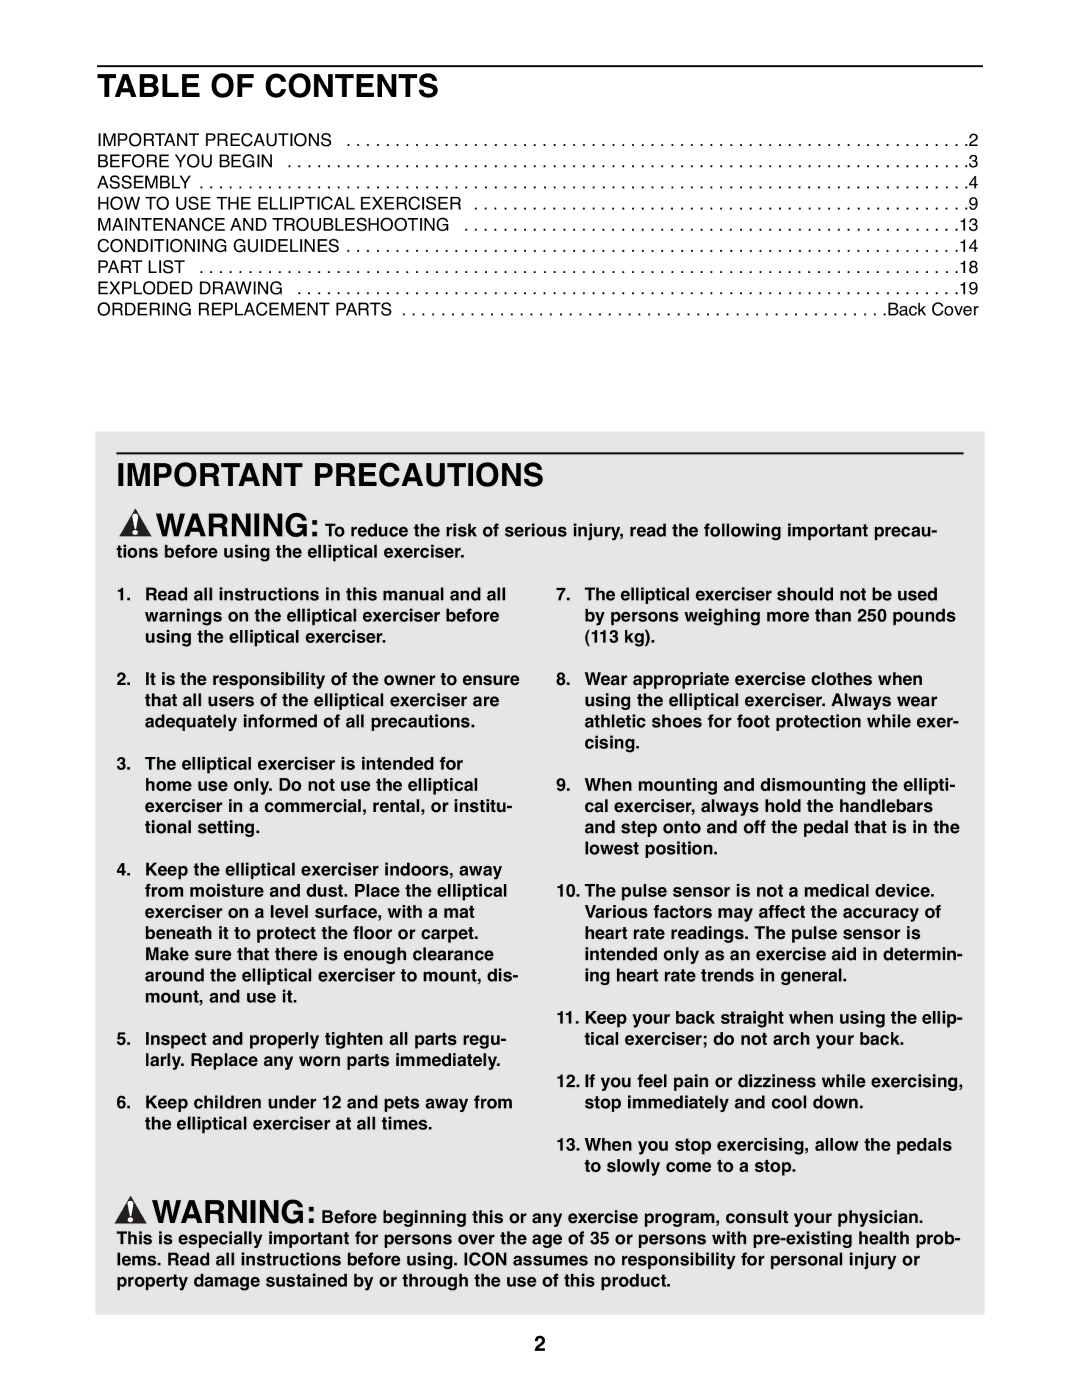 ProForm PFEVEL2486.0 user manual Table of Contents, Important Precautions 